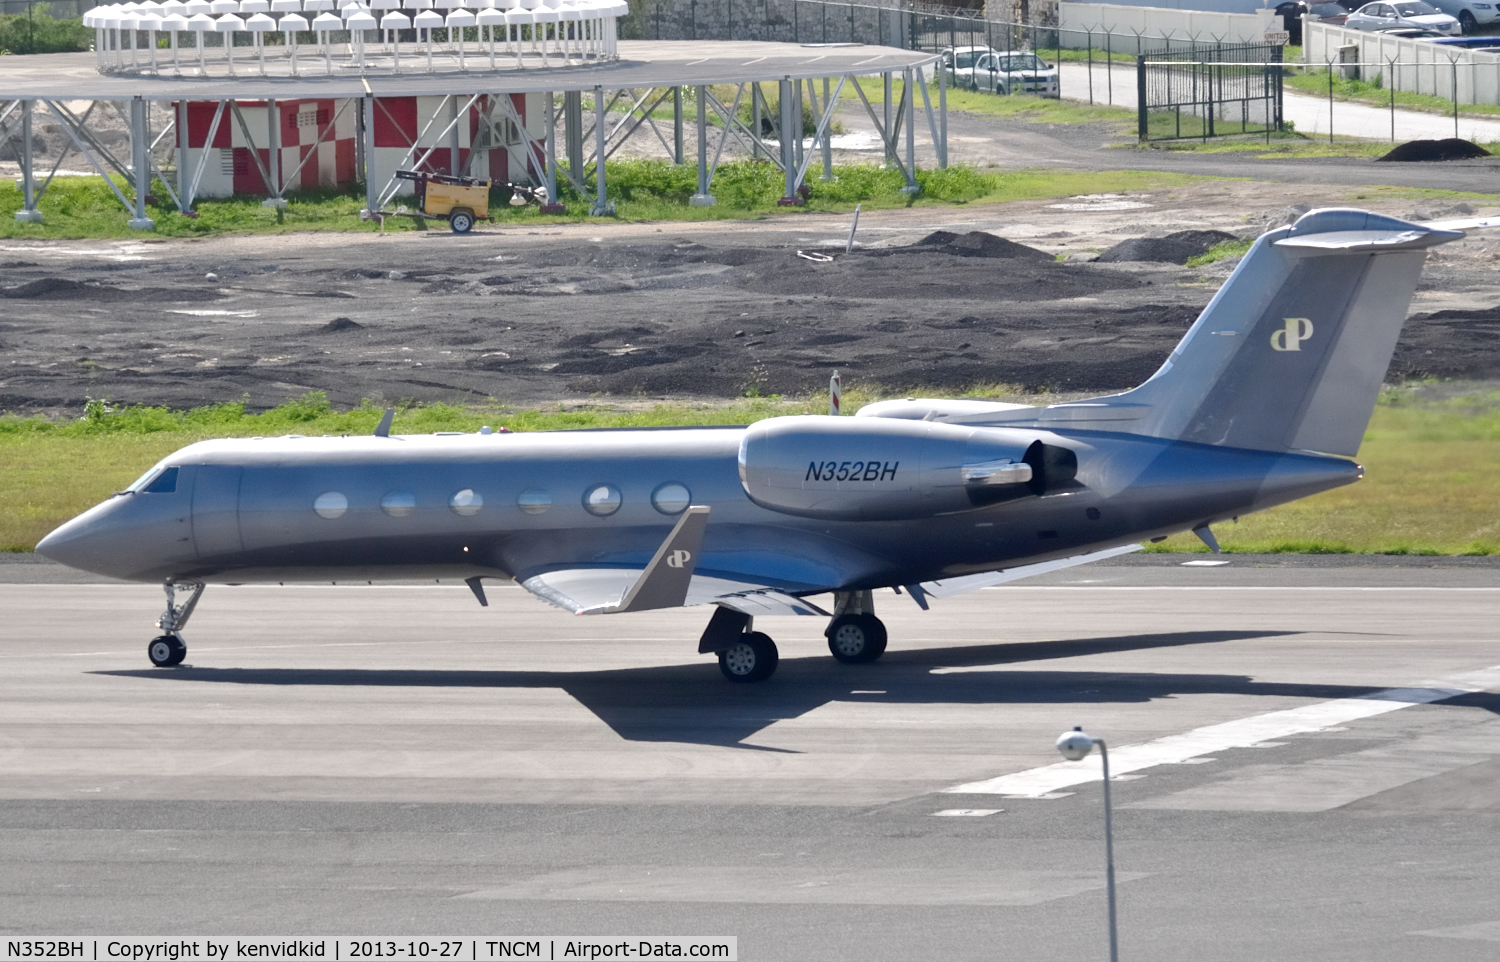 N352BH, 1999 Gulfstream Aerospace G-IV C/N 1393, Departing St Maarten.